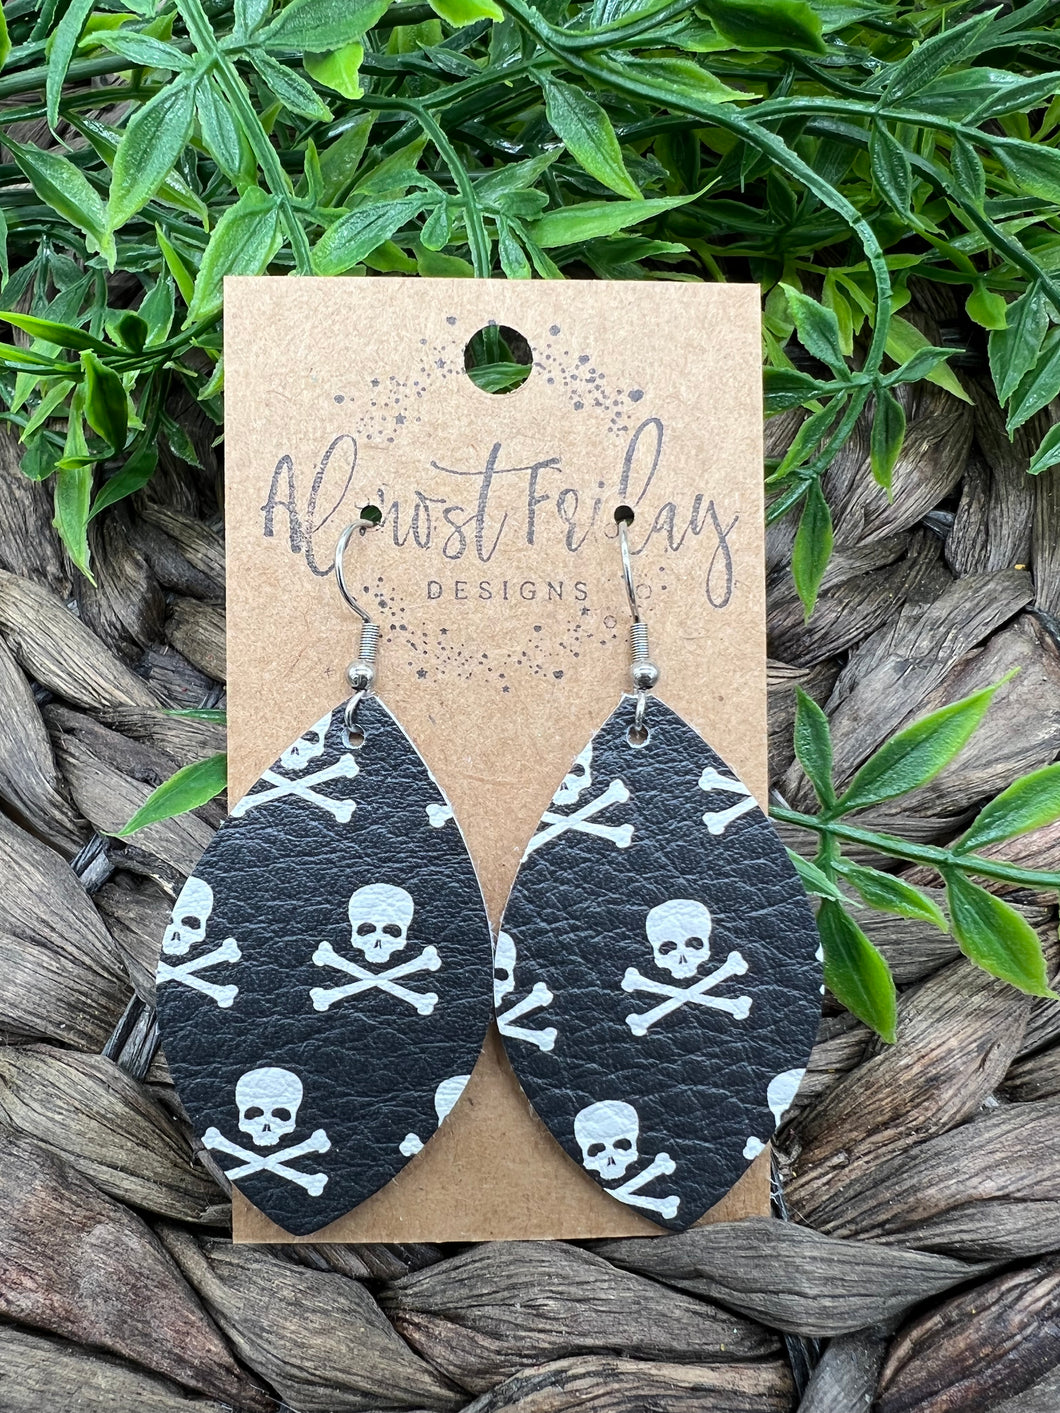 Genuine Leather Earrings - Leaf Cut - Halloween Earrings - Sugar Skulls - Skull and Bones - Skull - Bones - Statement Earrings